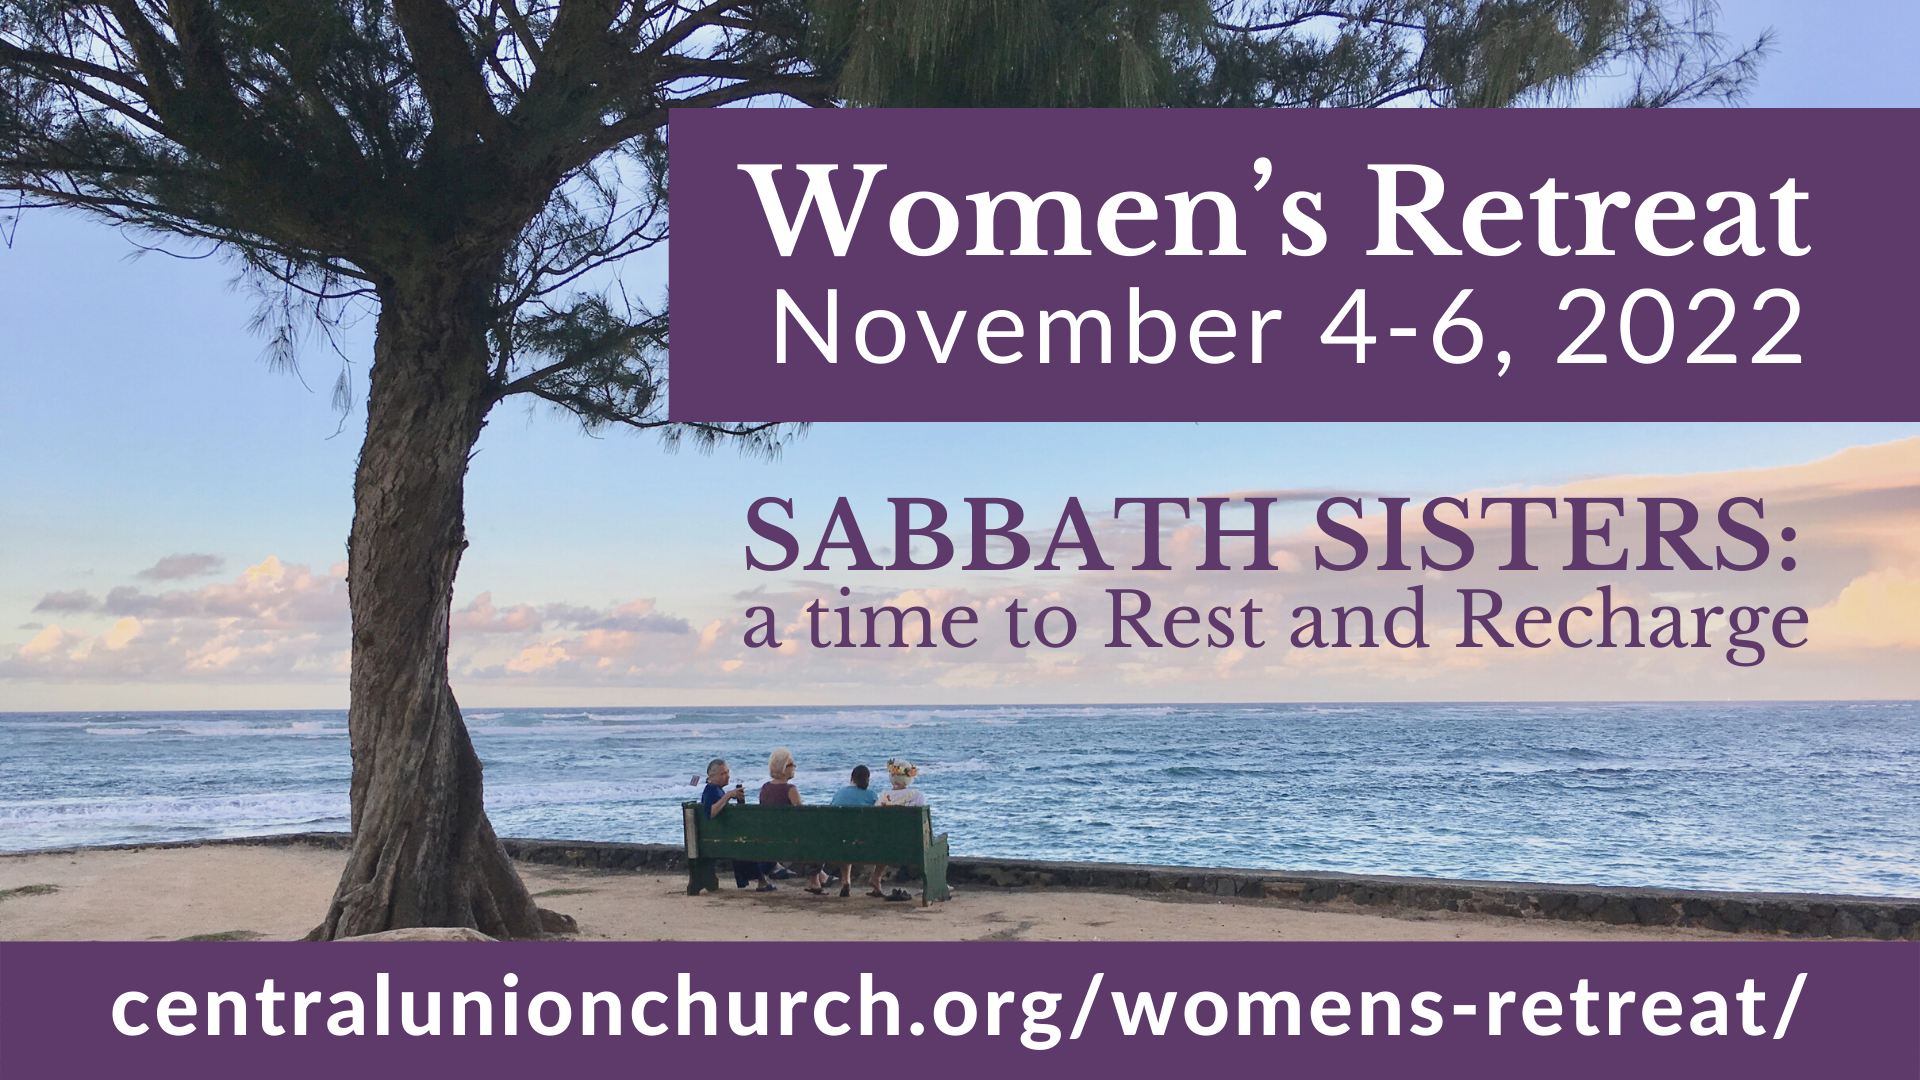 Women sitting on bench looking toward ocean. Text reads Women's Retreat November 4-6, 2022